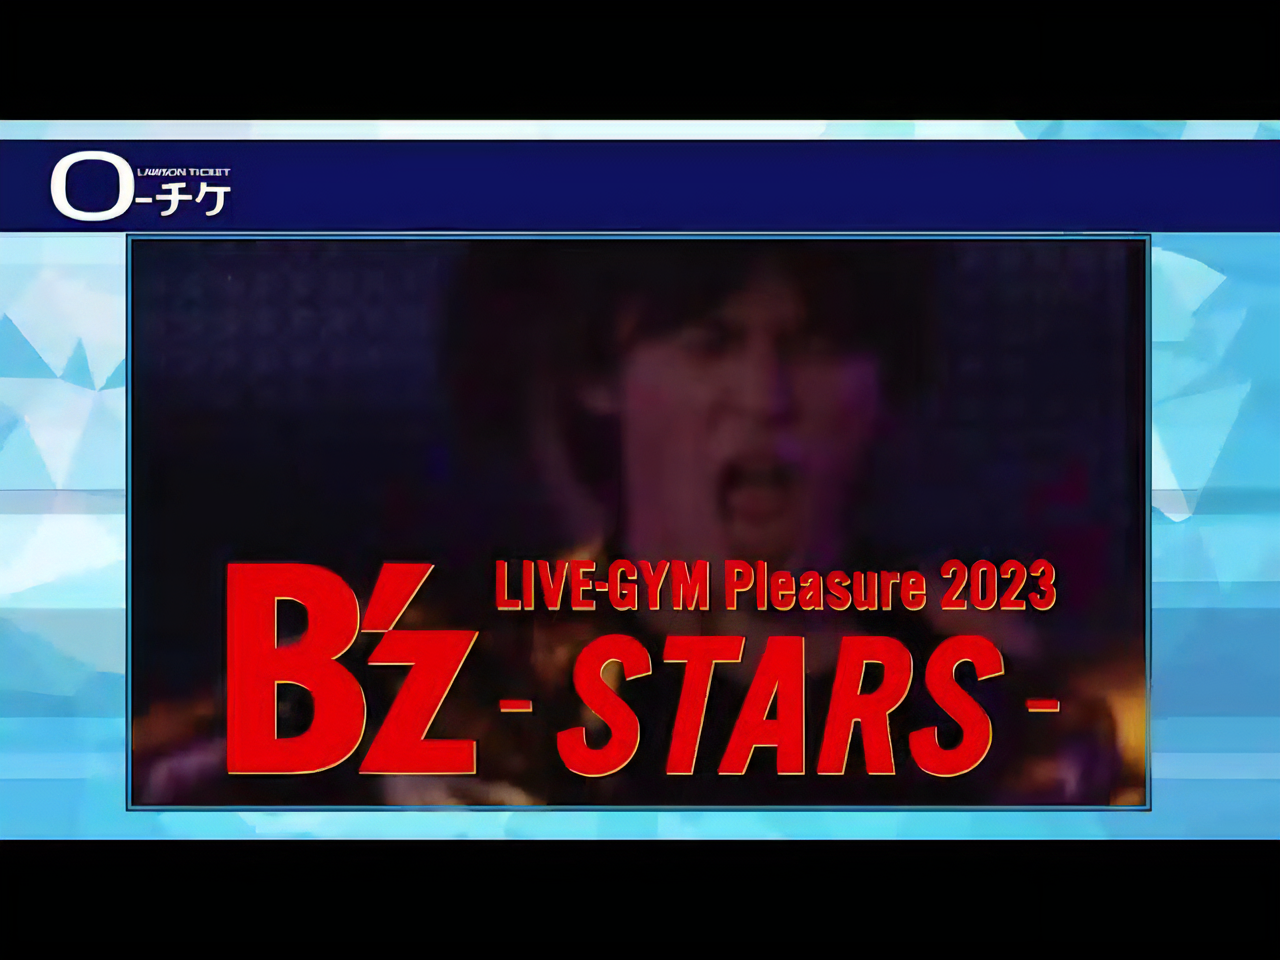 『B'z LIVE-GYM Pleasure 2023 -STARS-』「ローソンチケット 特別先着受付」の告知動画